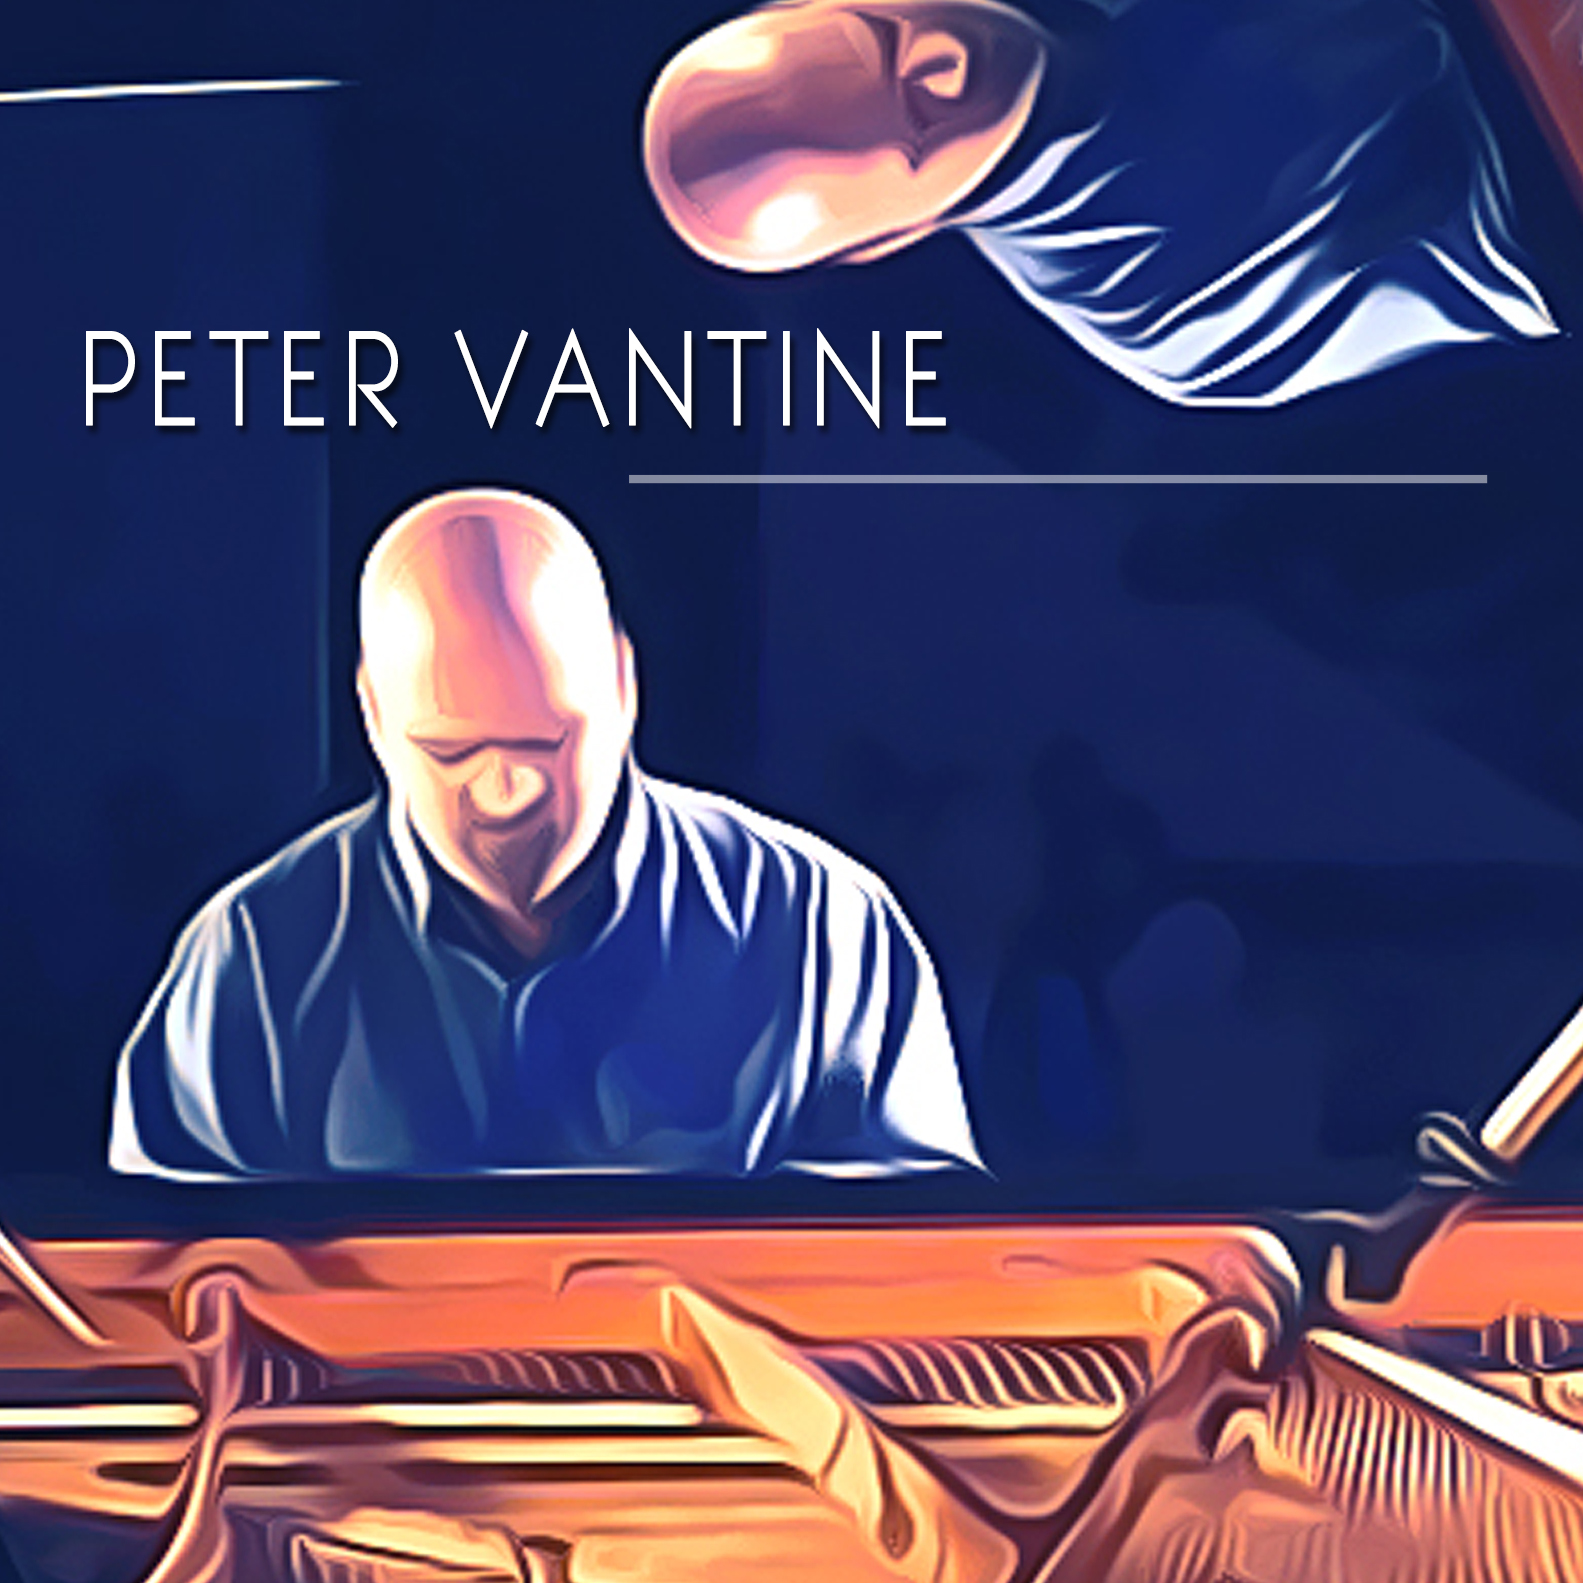 Peter Vantine